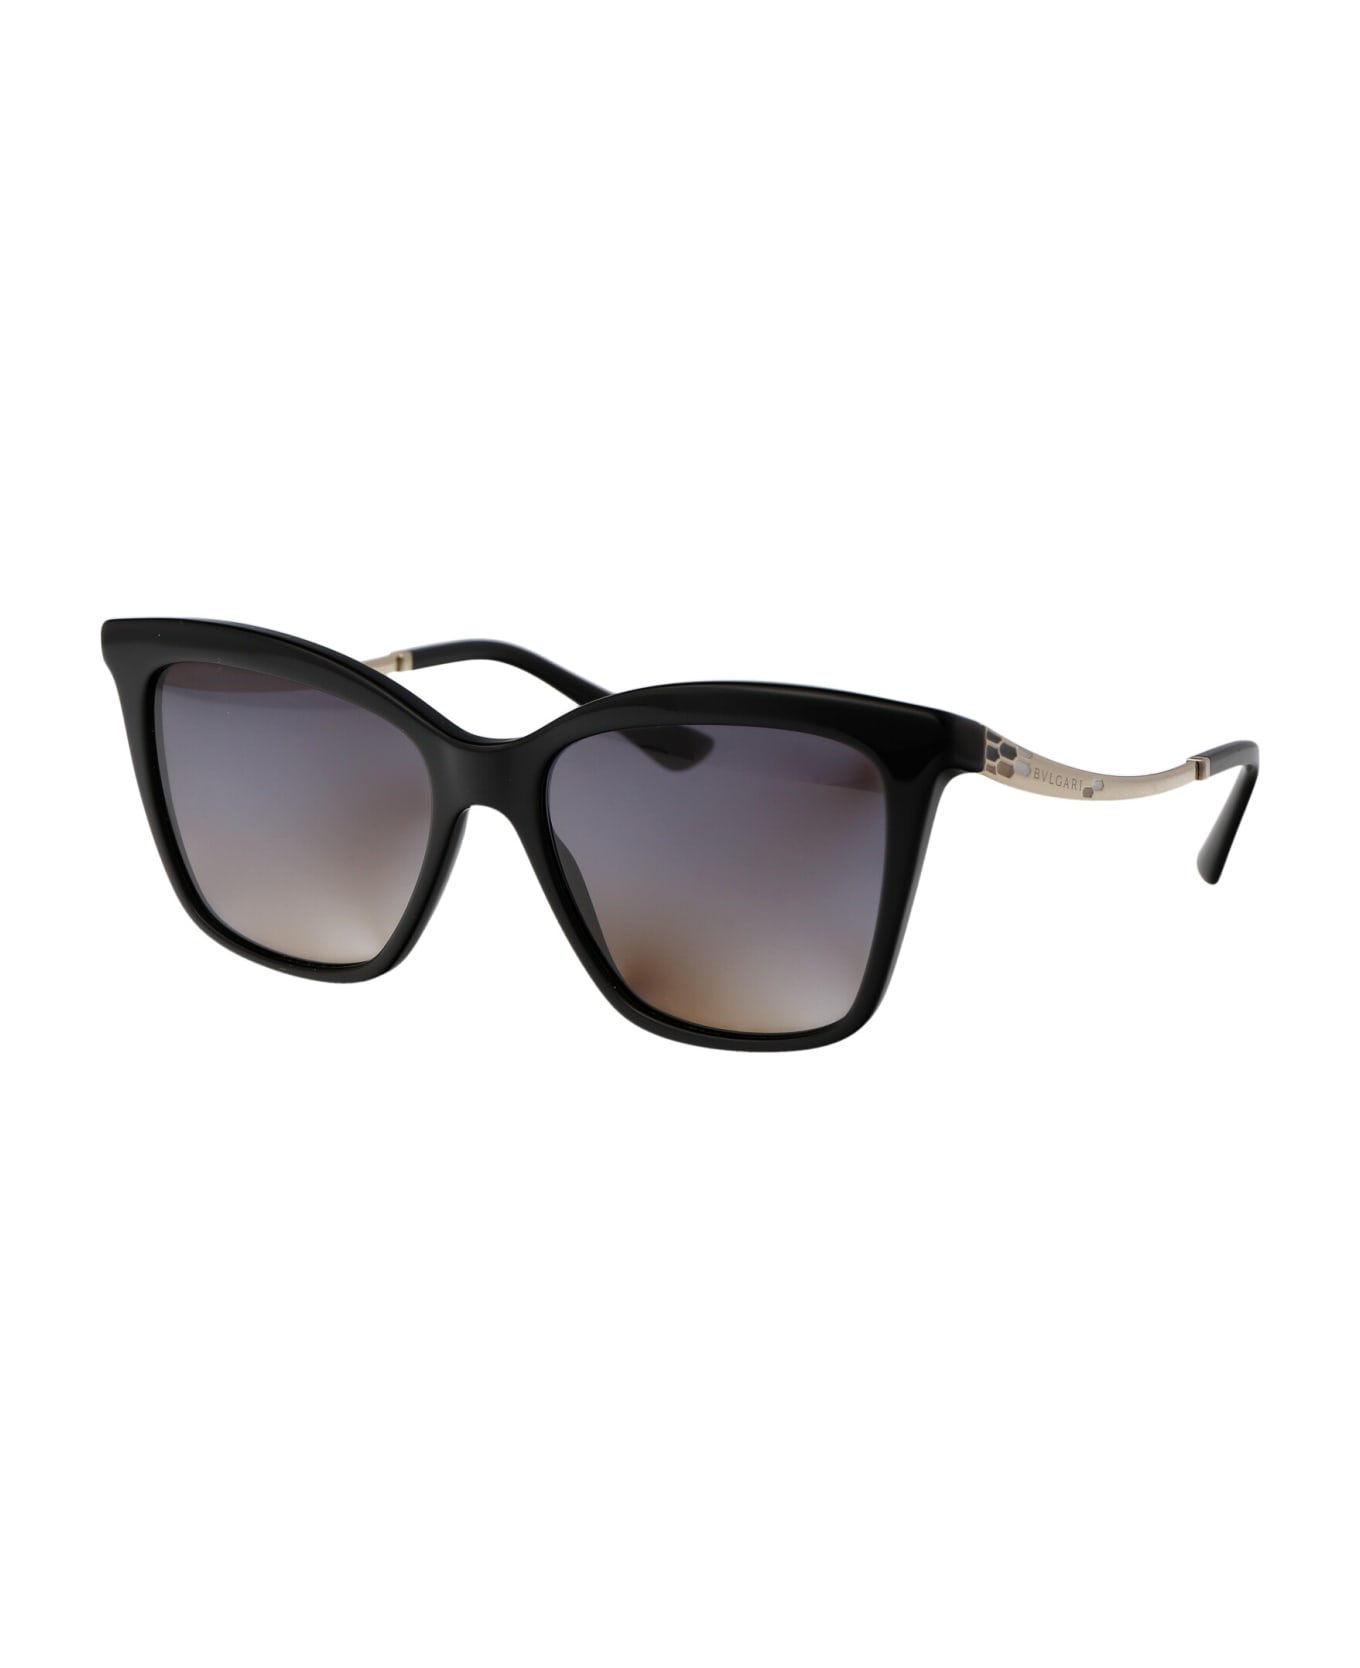 Bulgari 0bv8257 Sunglasses - 501/T3 BLACK サングラス